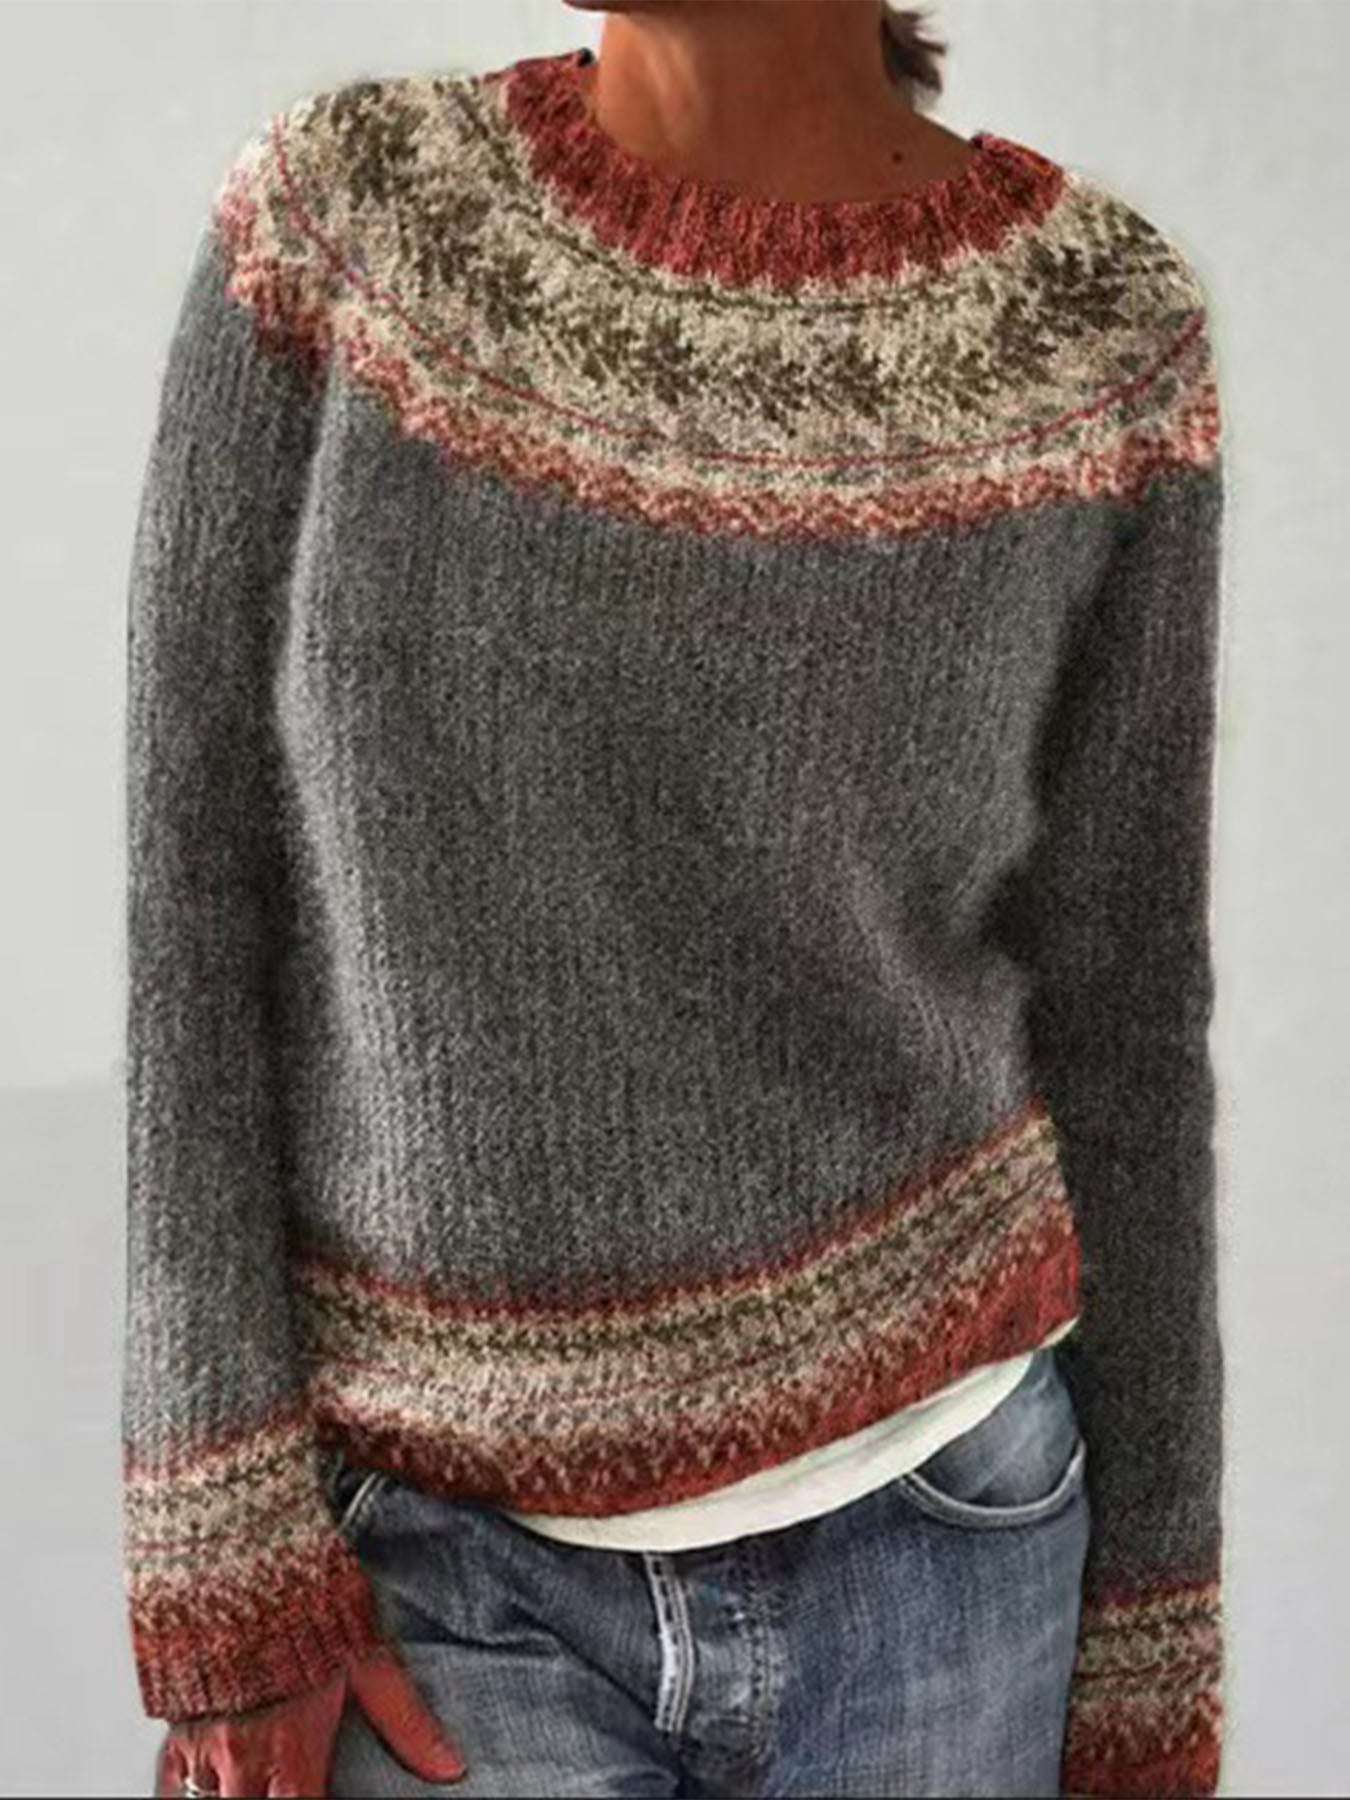 Vorioal Warm Knit Loose Pullover